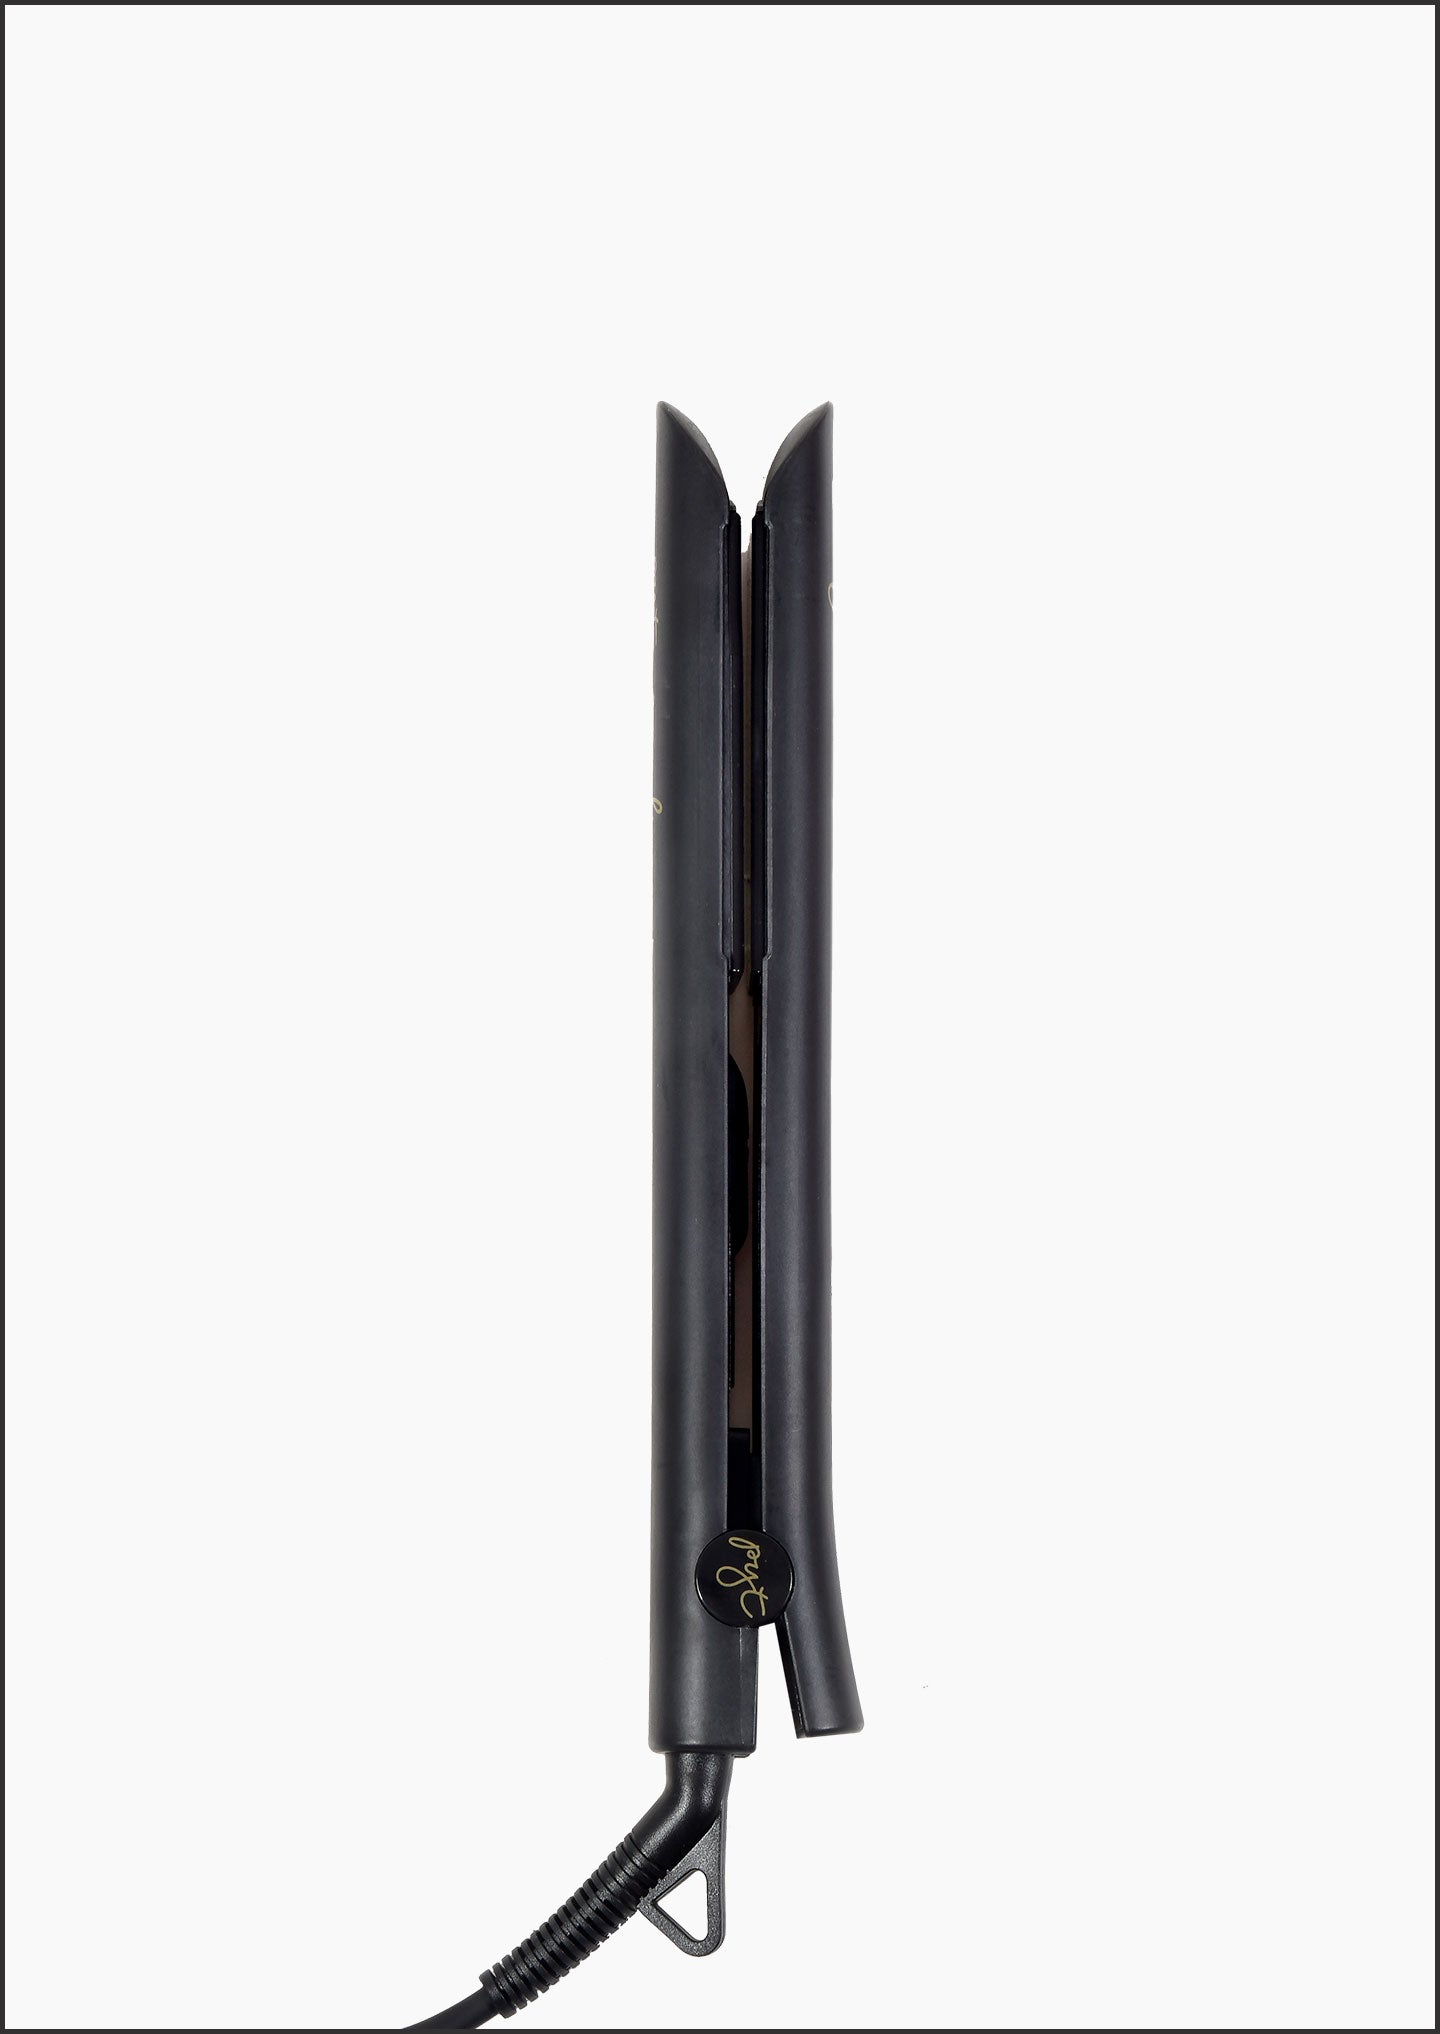 Pyt Luxe Ion Fusion 2.0 Pro Digital Titanium Styler Black